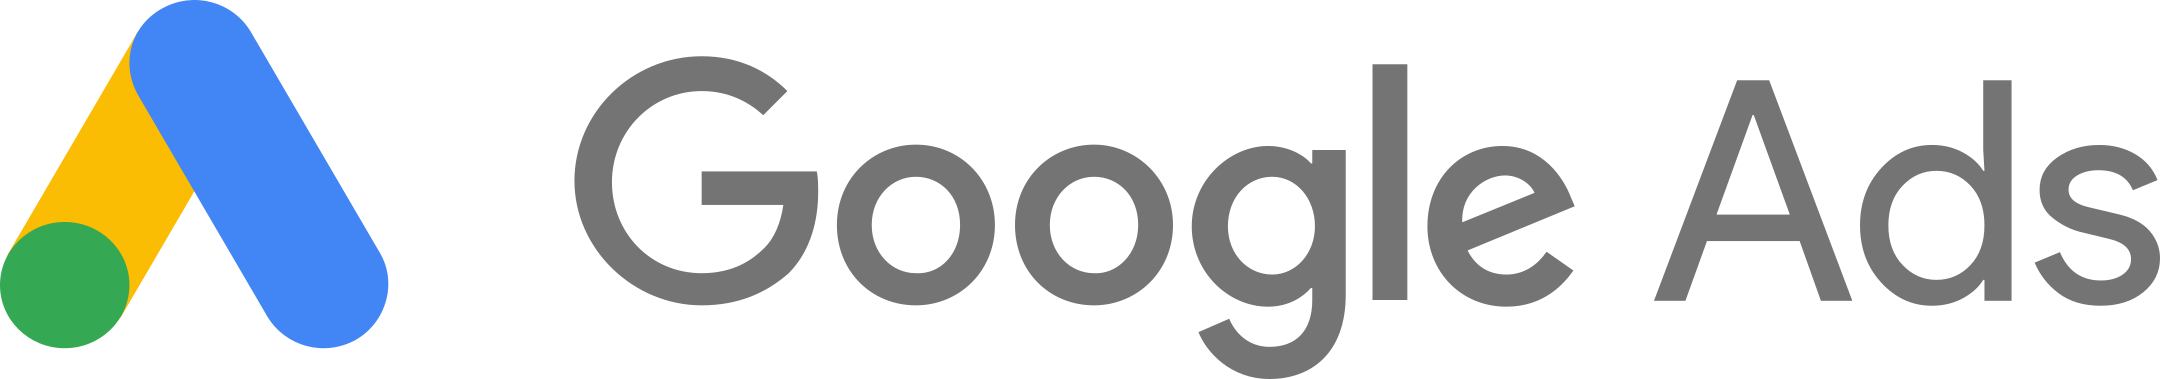 google adwords logo 1 - Google Ads Logo